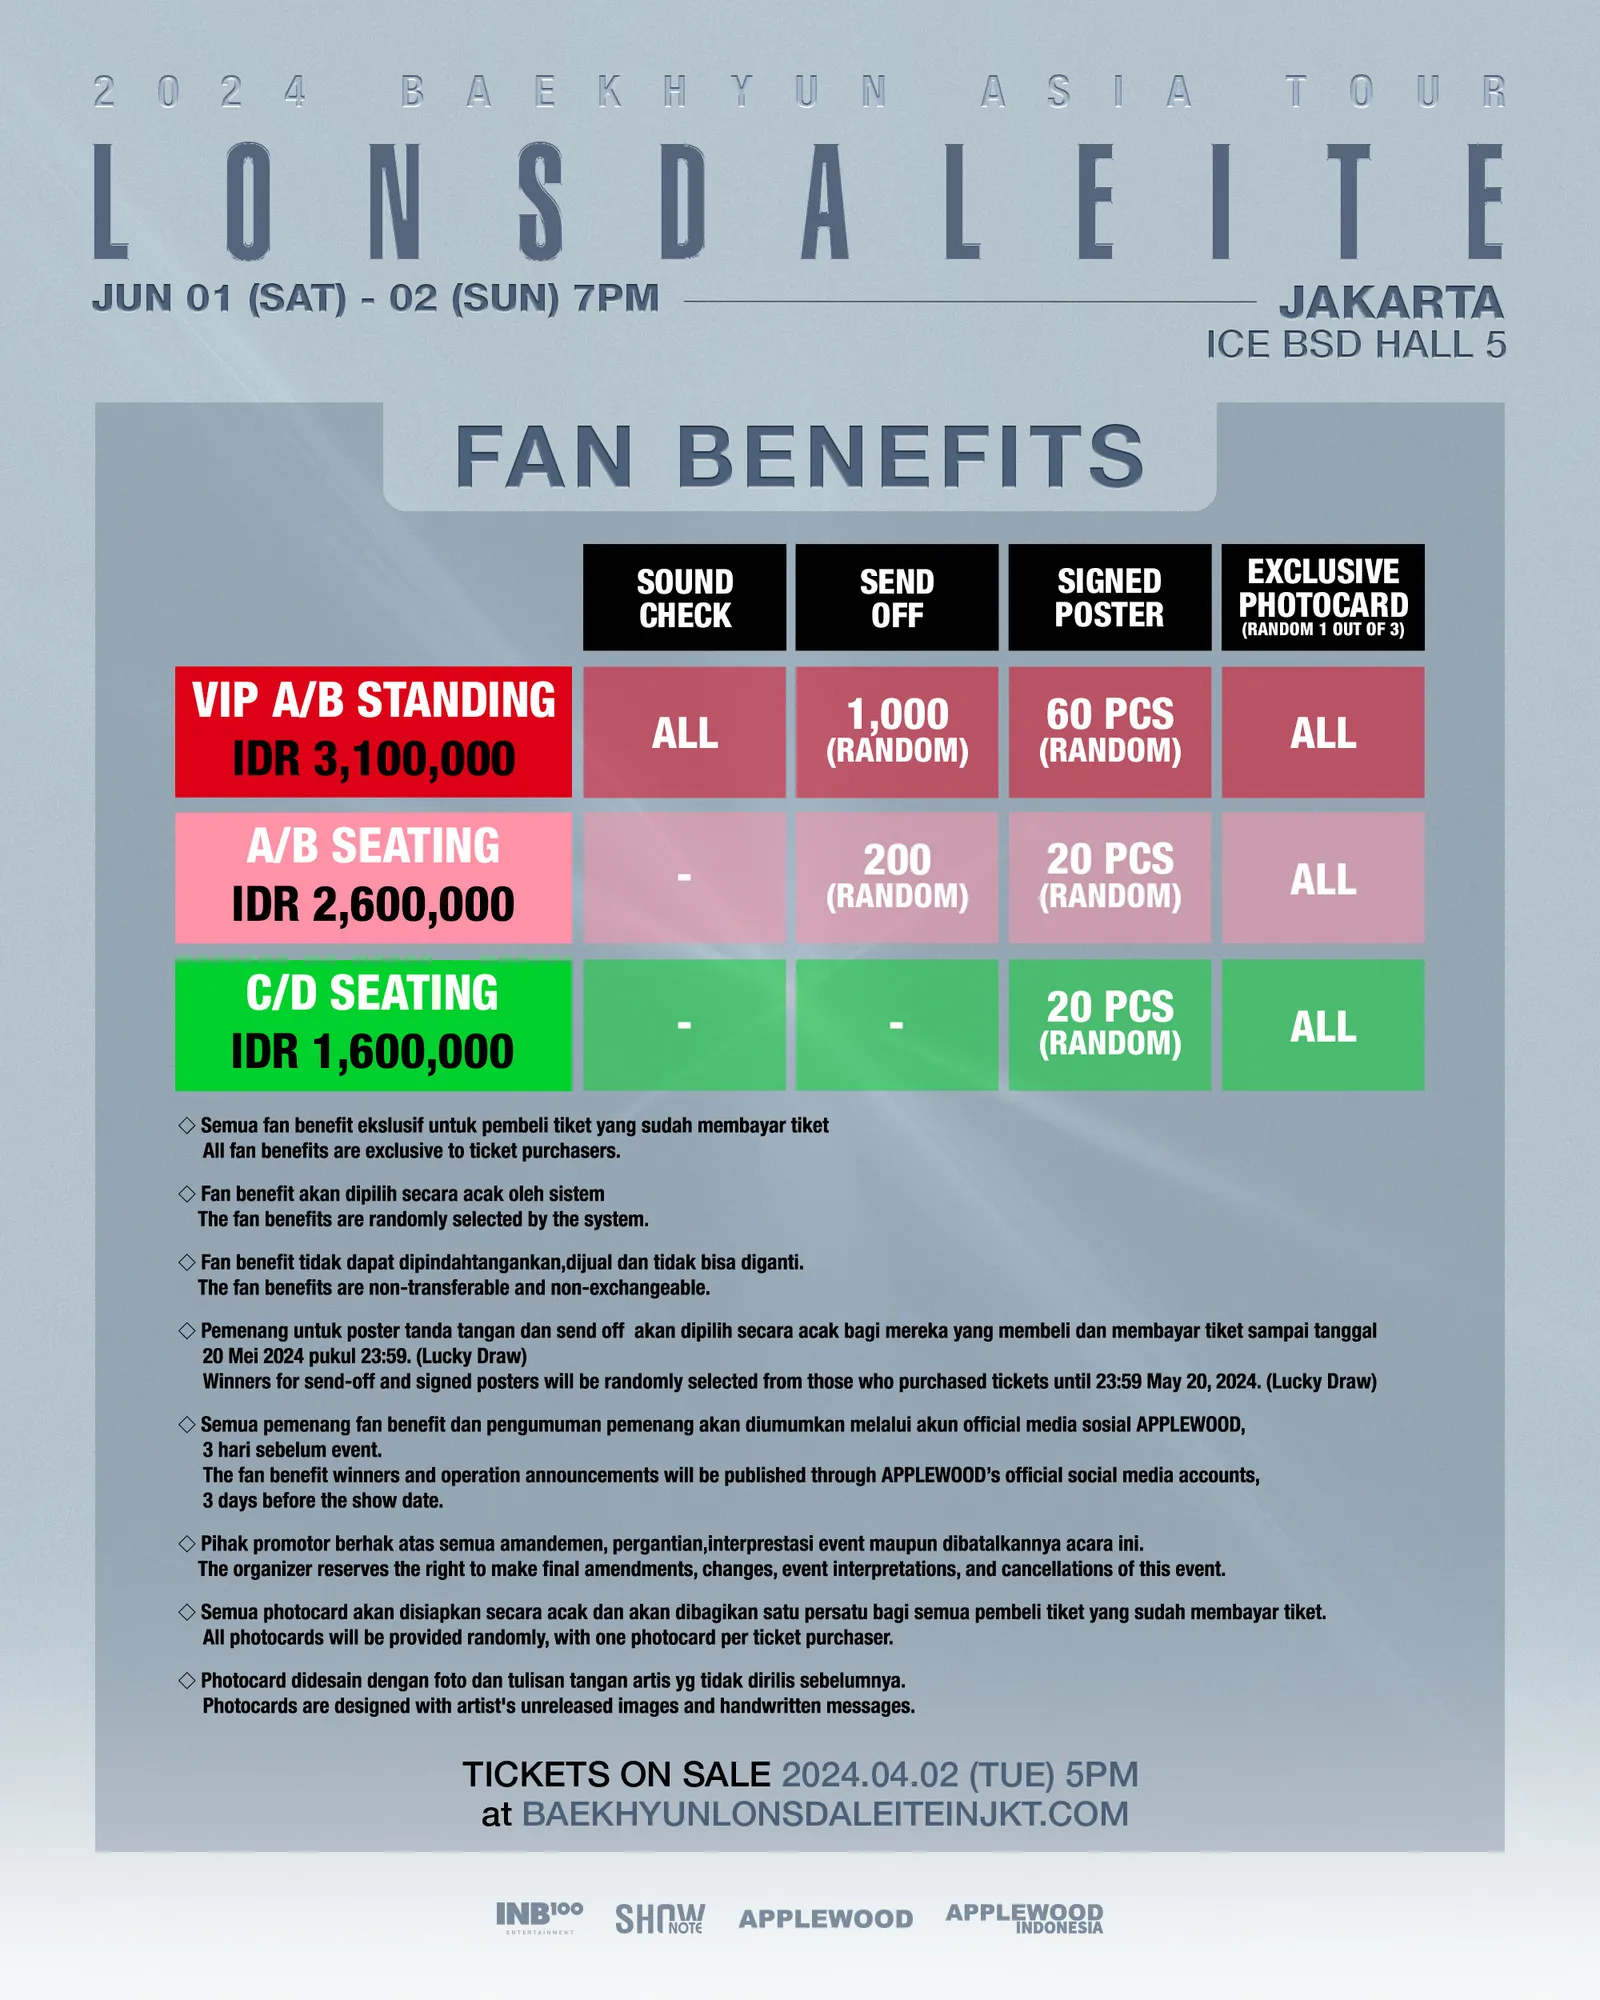 Baekhyun Konser 'Lonsdaleite' Jakarta 2 Hari, Apa Saja Benefitnya?